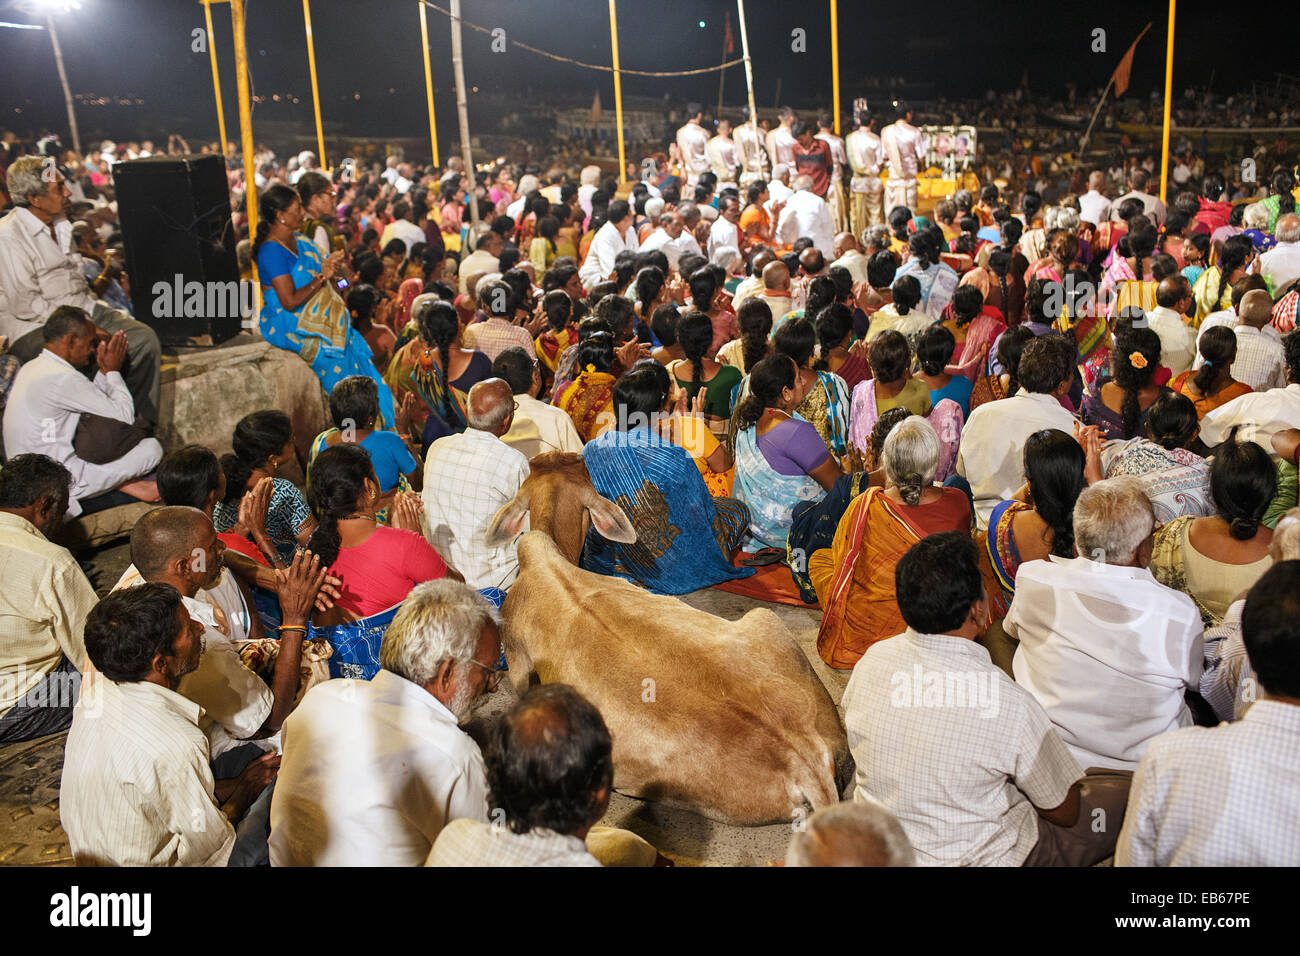 Las multitudes esperar Ganga Aarti ceremonia para iniciar en el main ghat de Varanasi, en India. Foto de stock